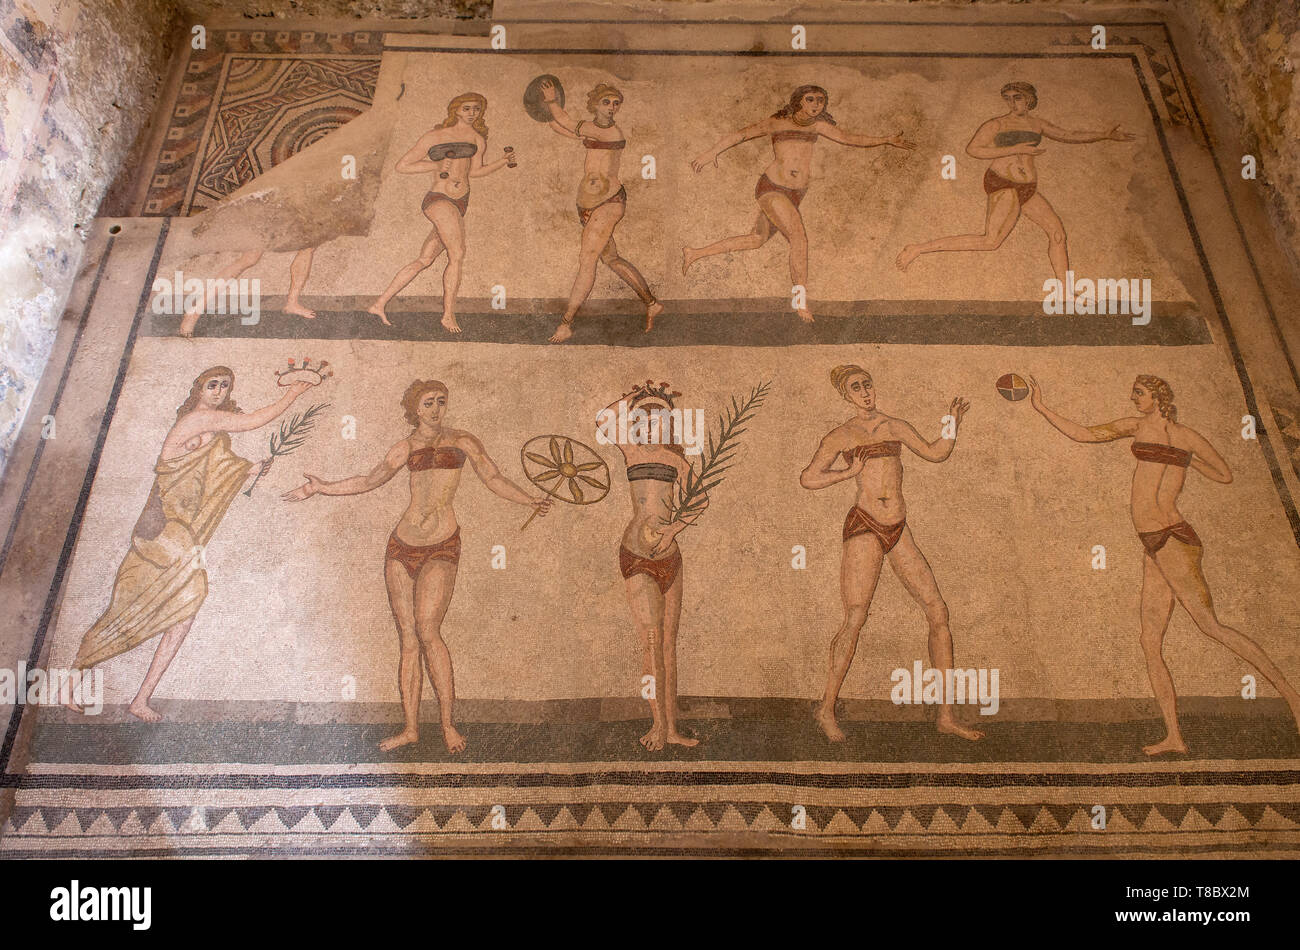 PIAZZA ARMERINA, ITALY - APRIL, 24: The 'bikini' mosaic, showing women playing sports. Villa Romana del Casale, large and elaborate Roman villa  desig Stock Photo